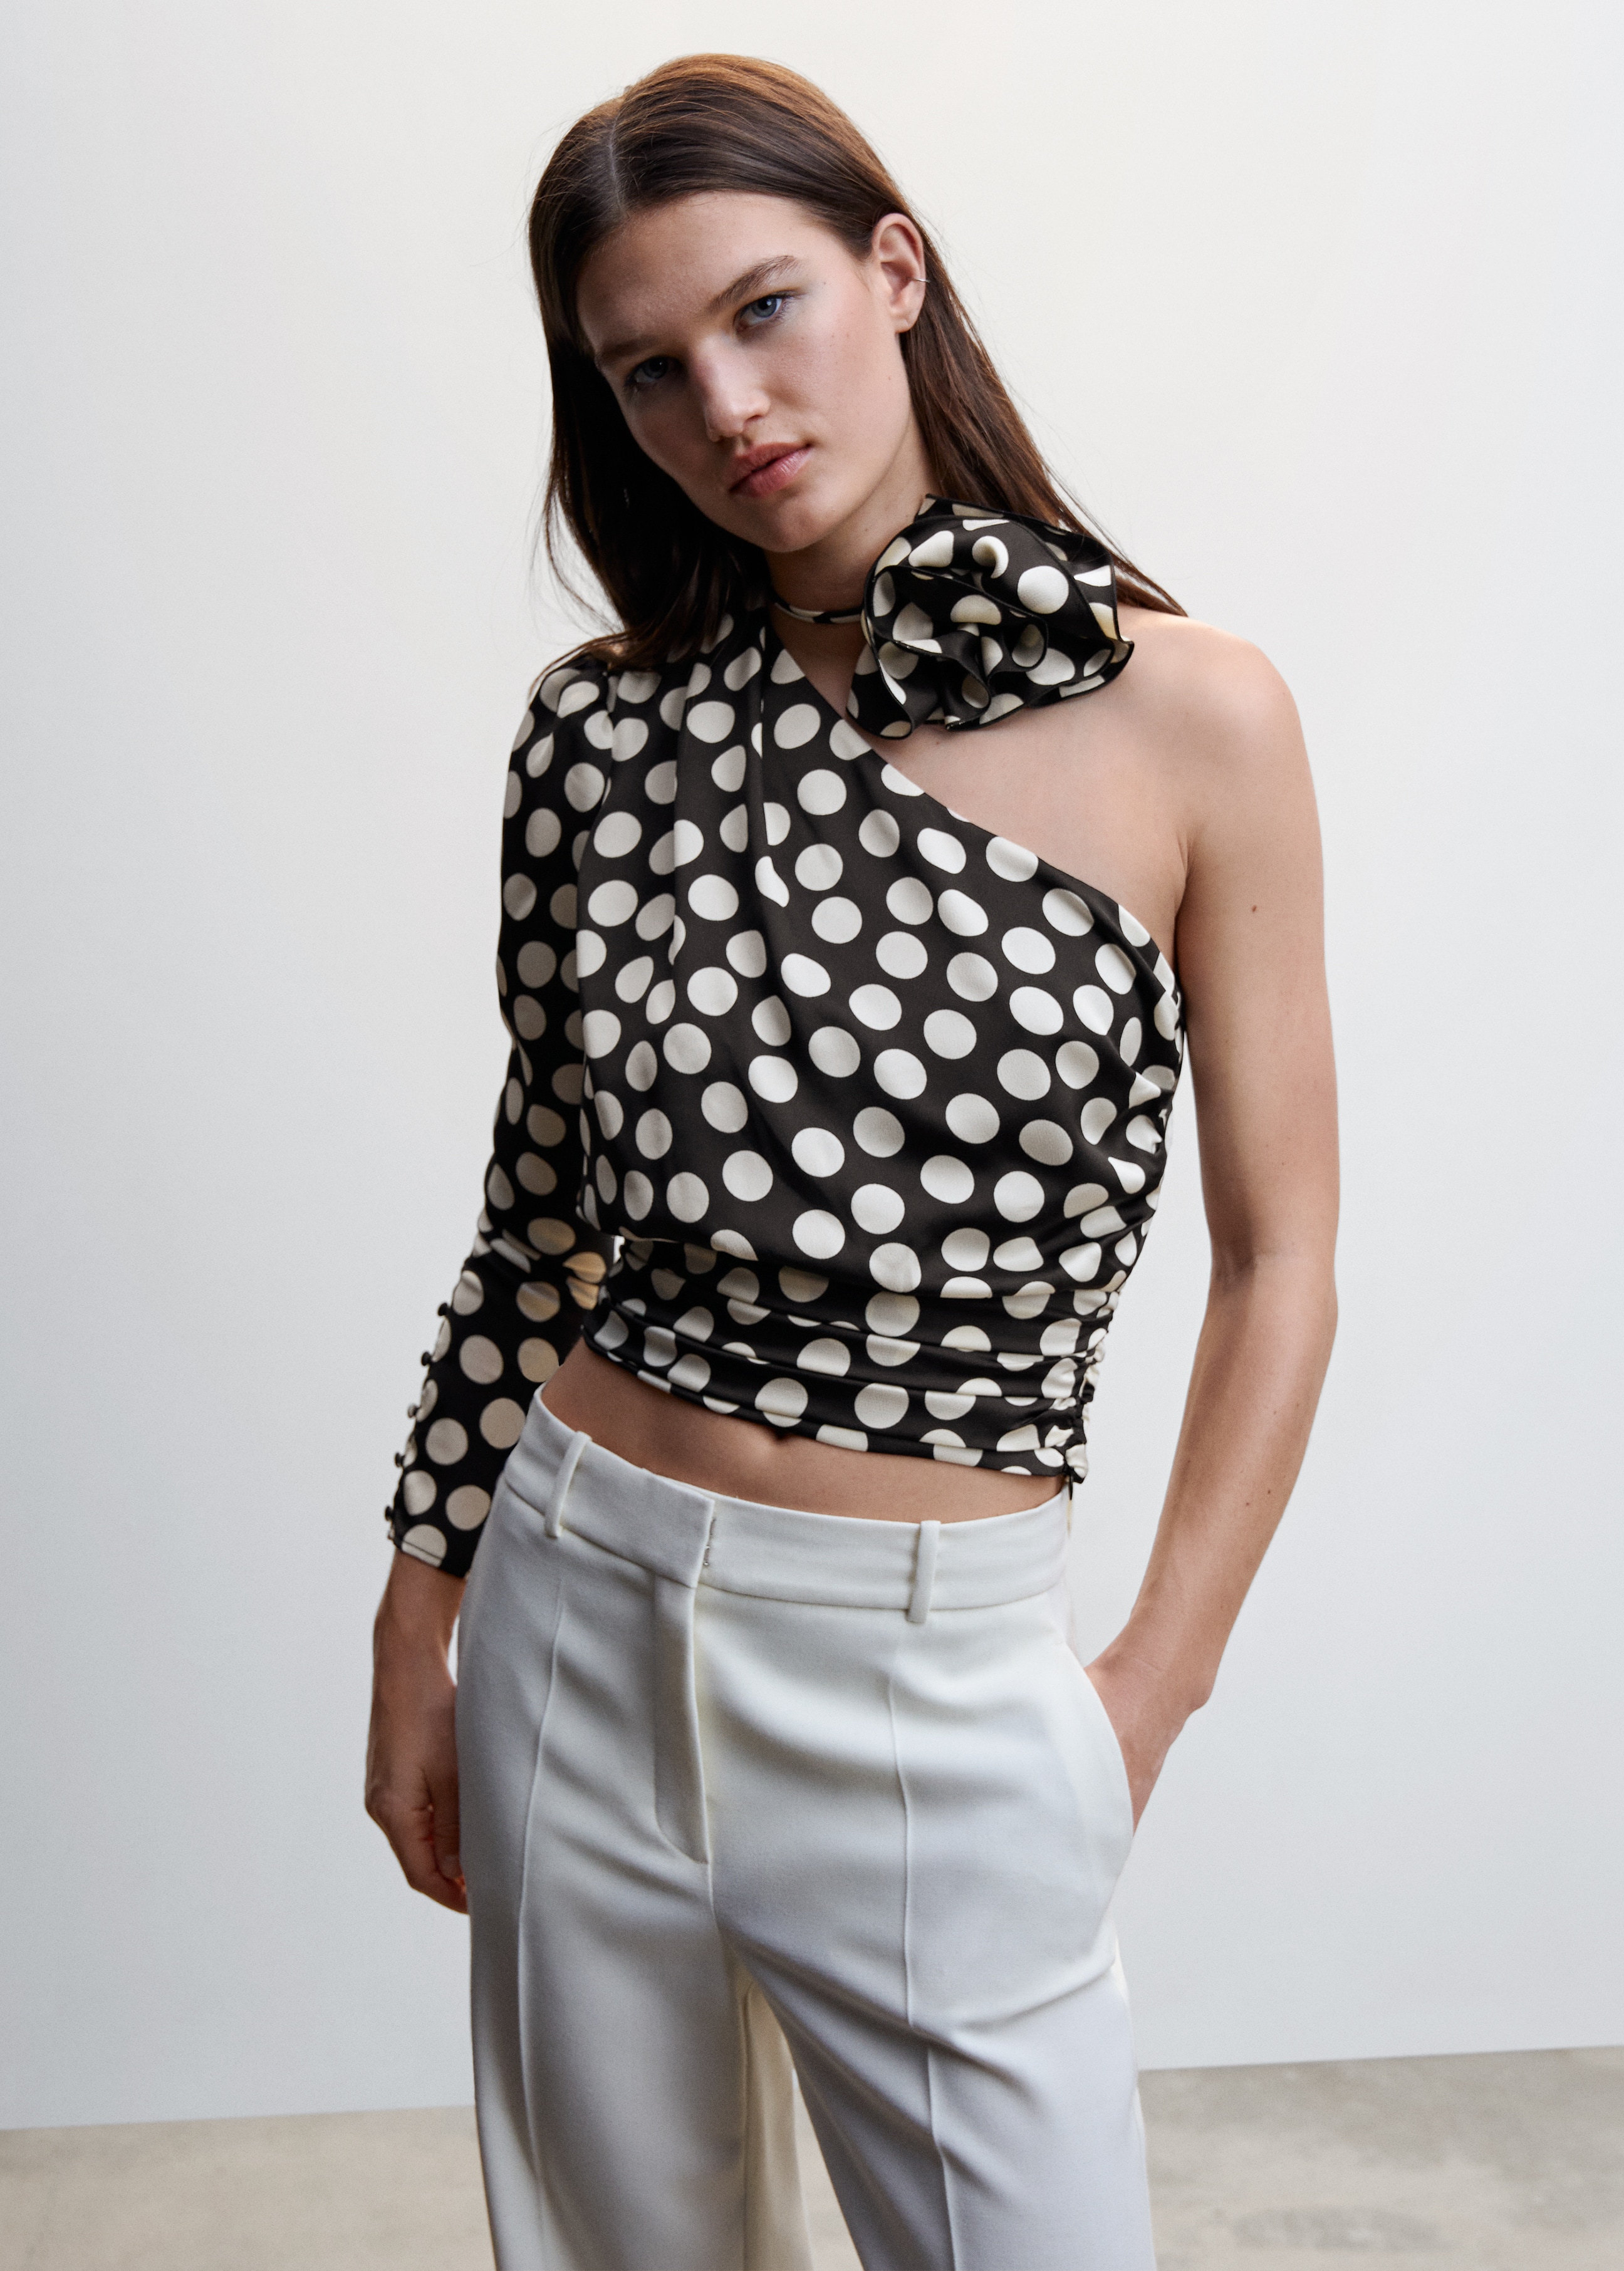 Polka-dot blouse with floral applique  - Medium plane